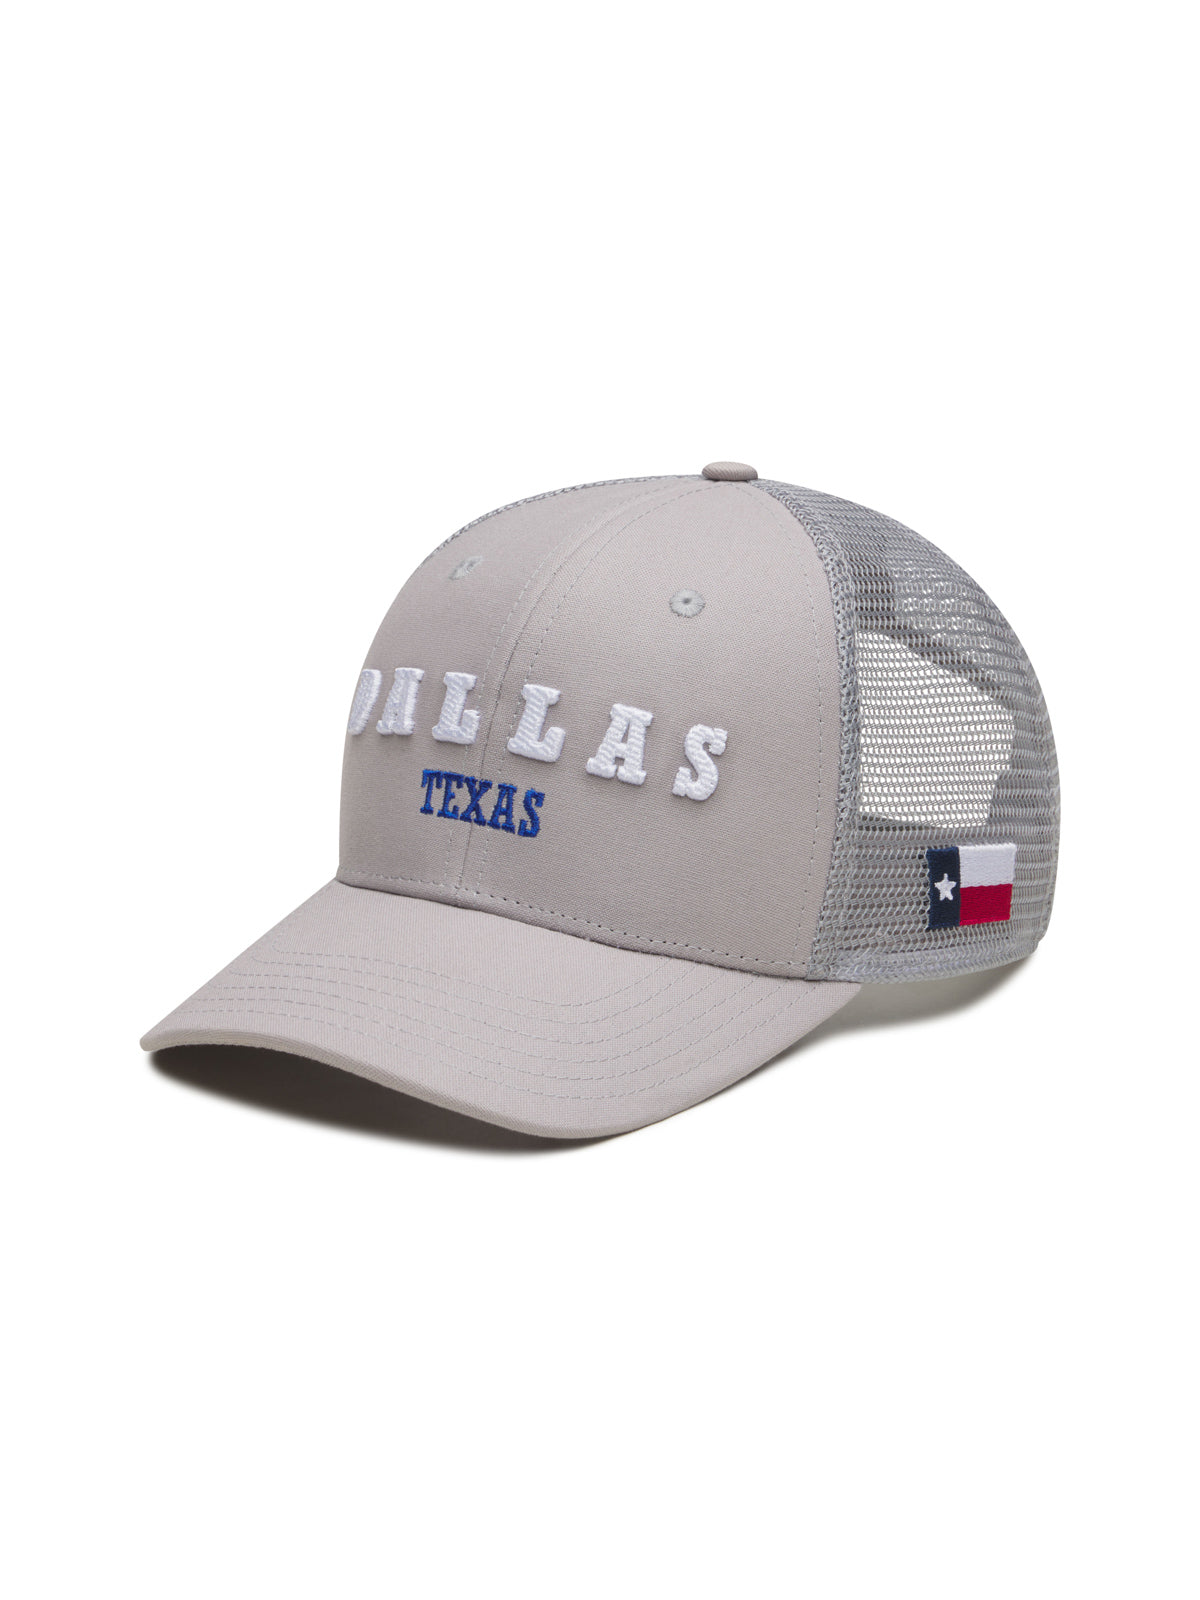 Dallas, TX Trucker Hat - tasc Performance (Steel)